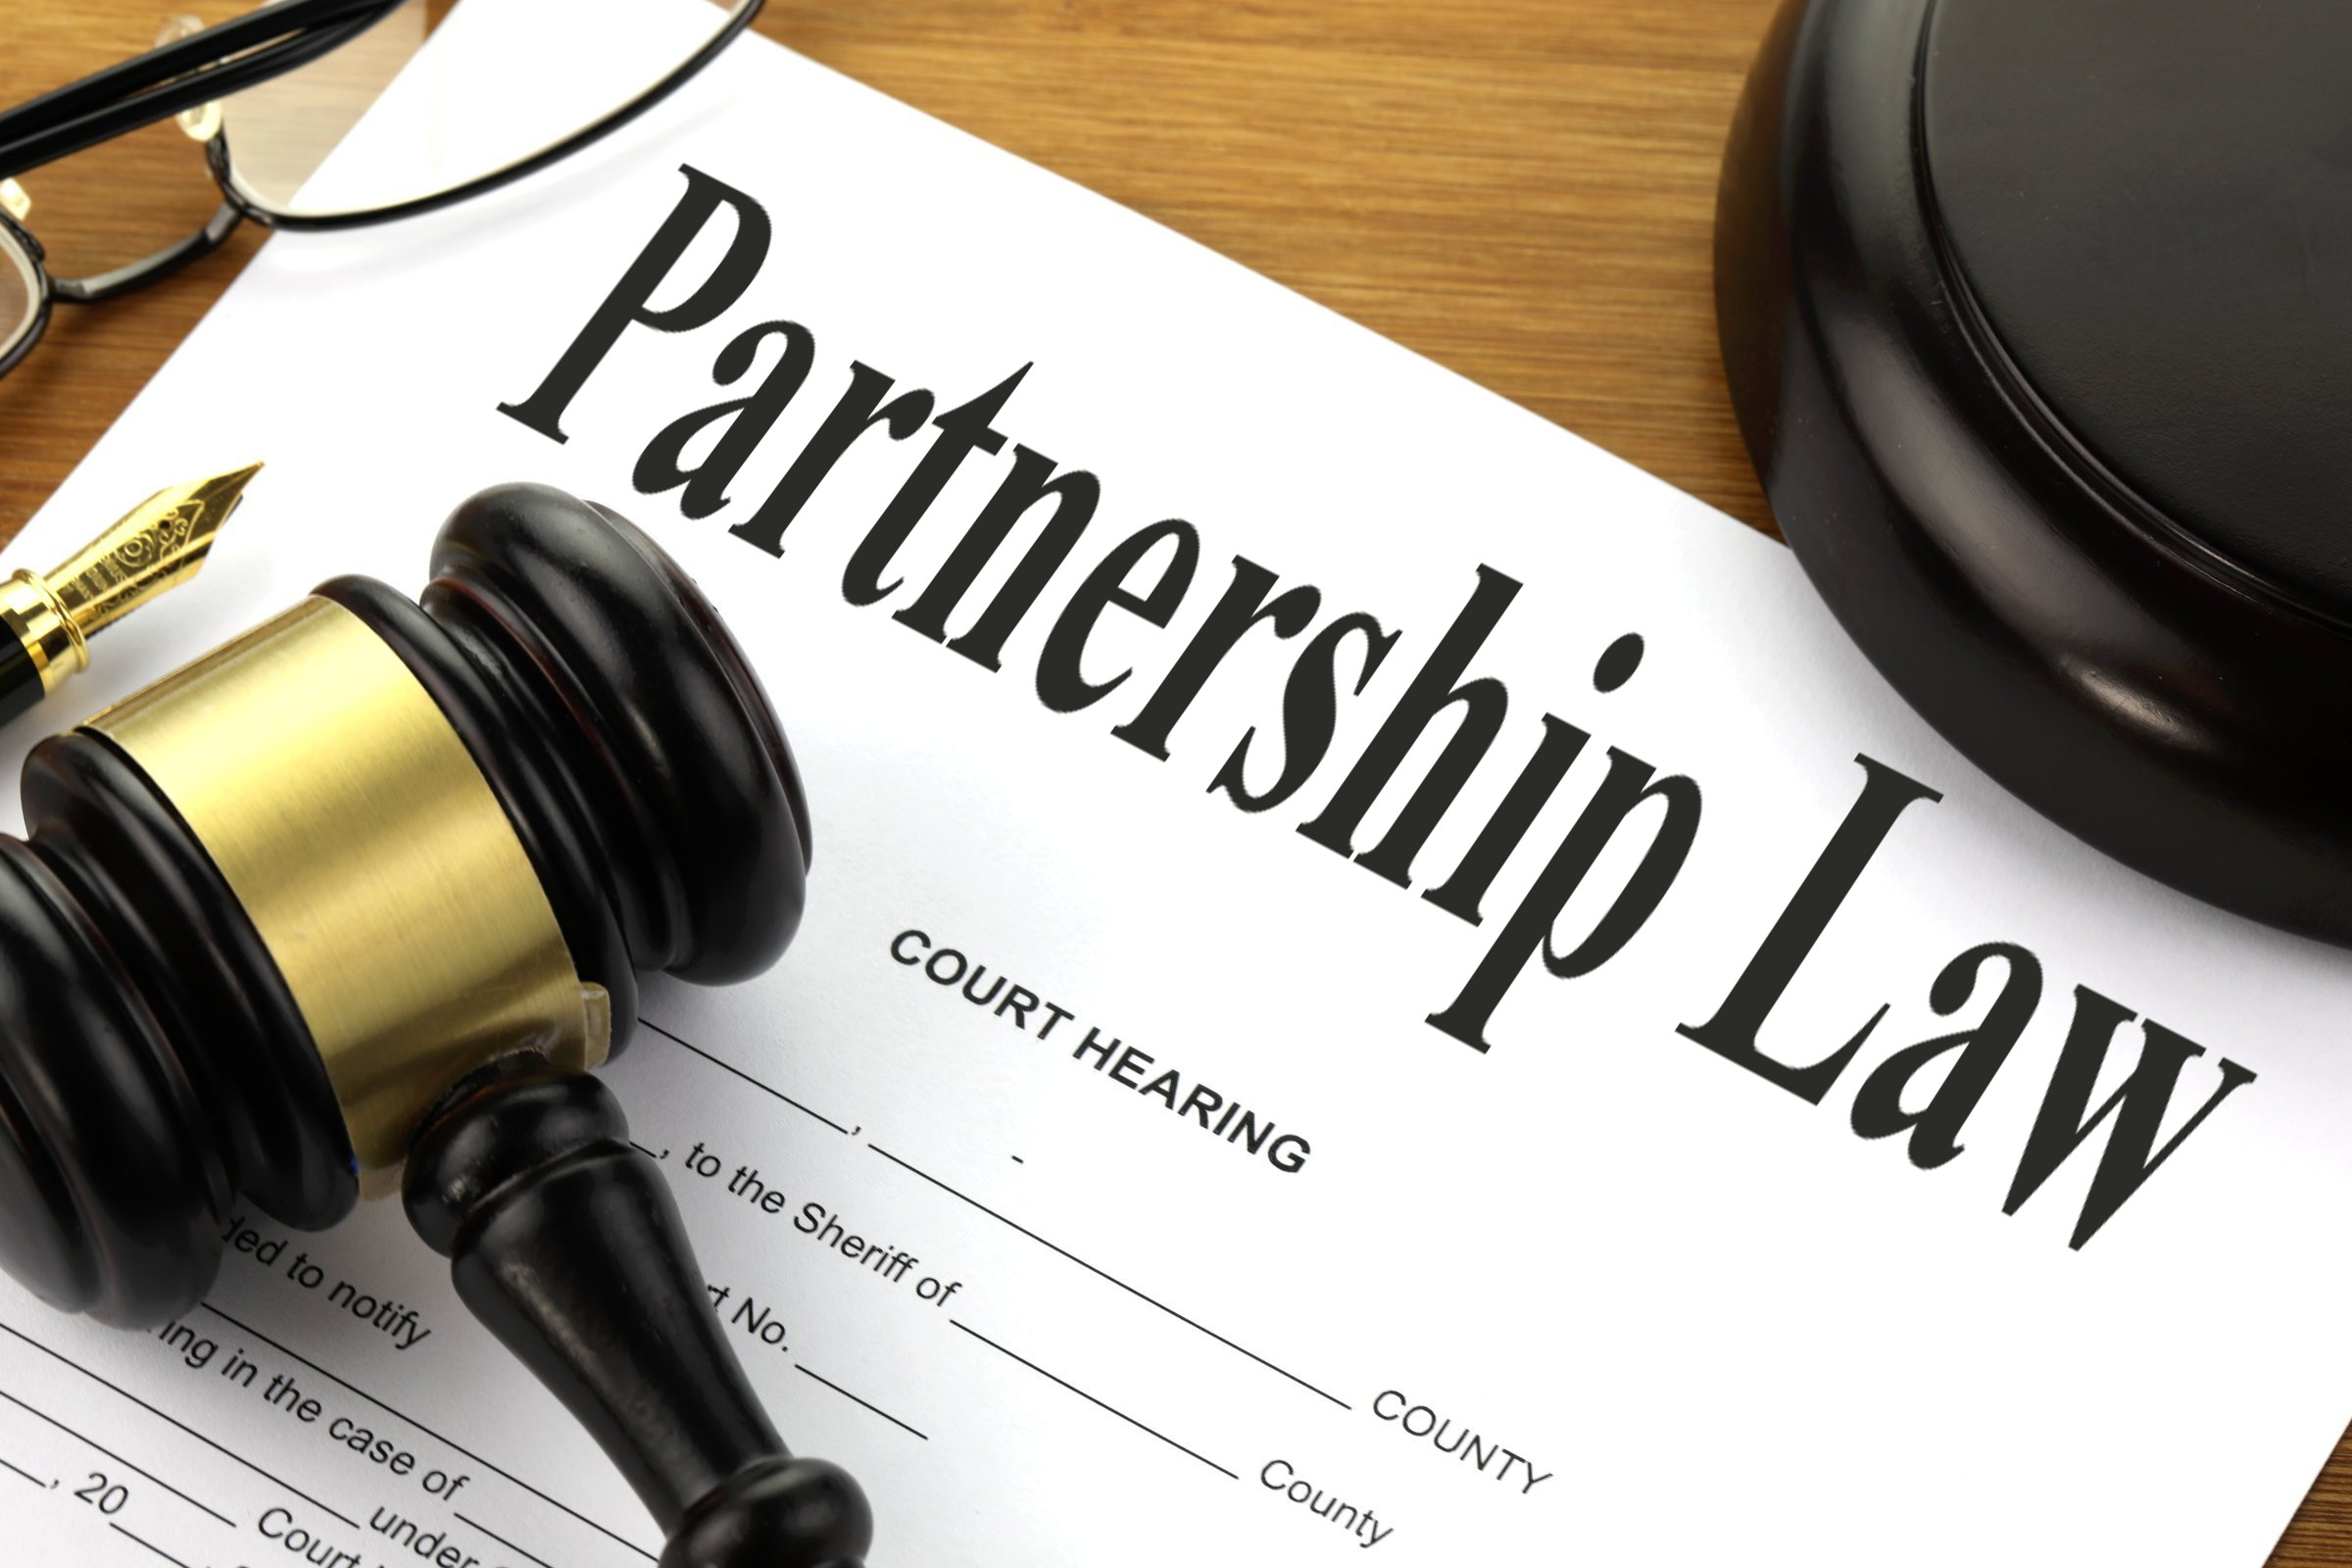 partnership law